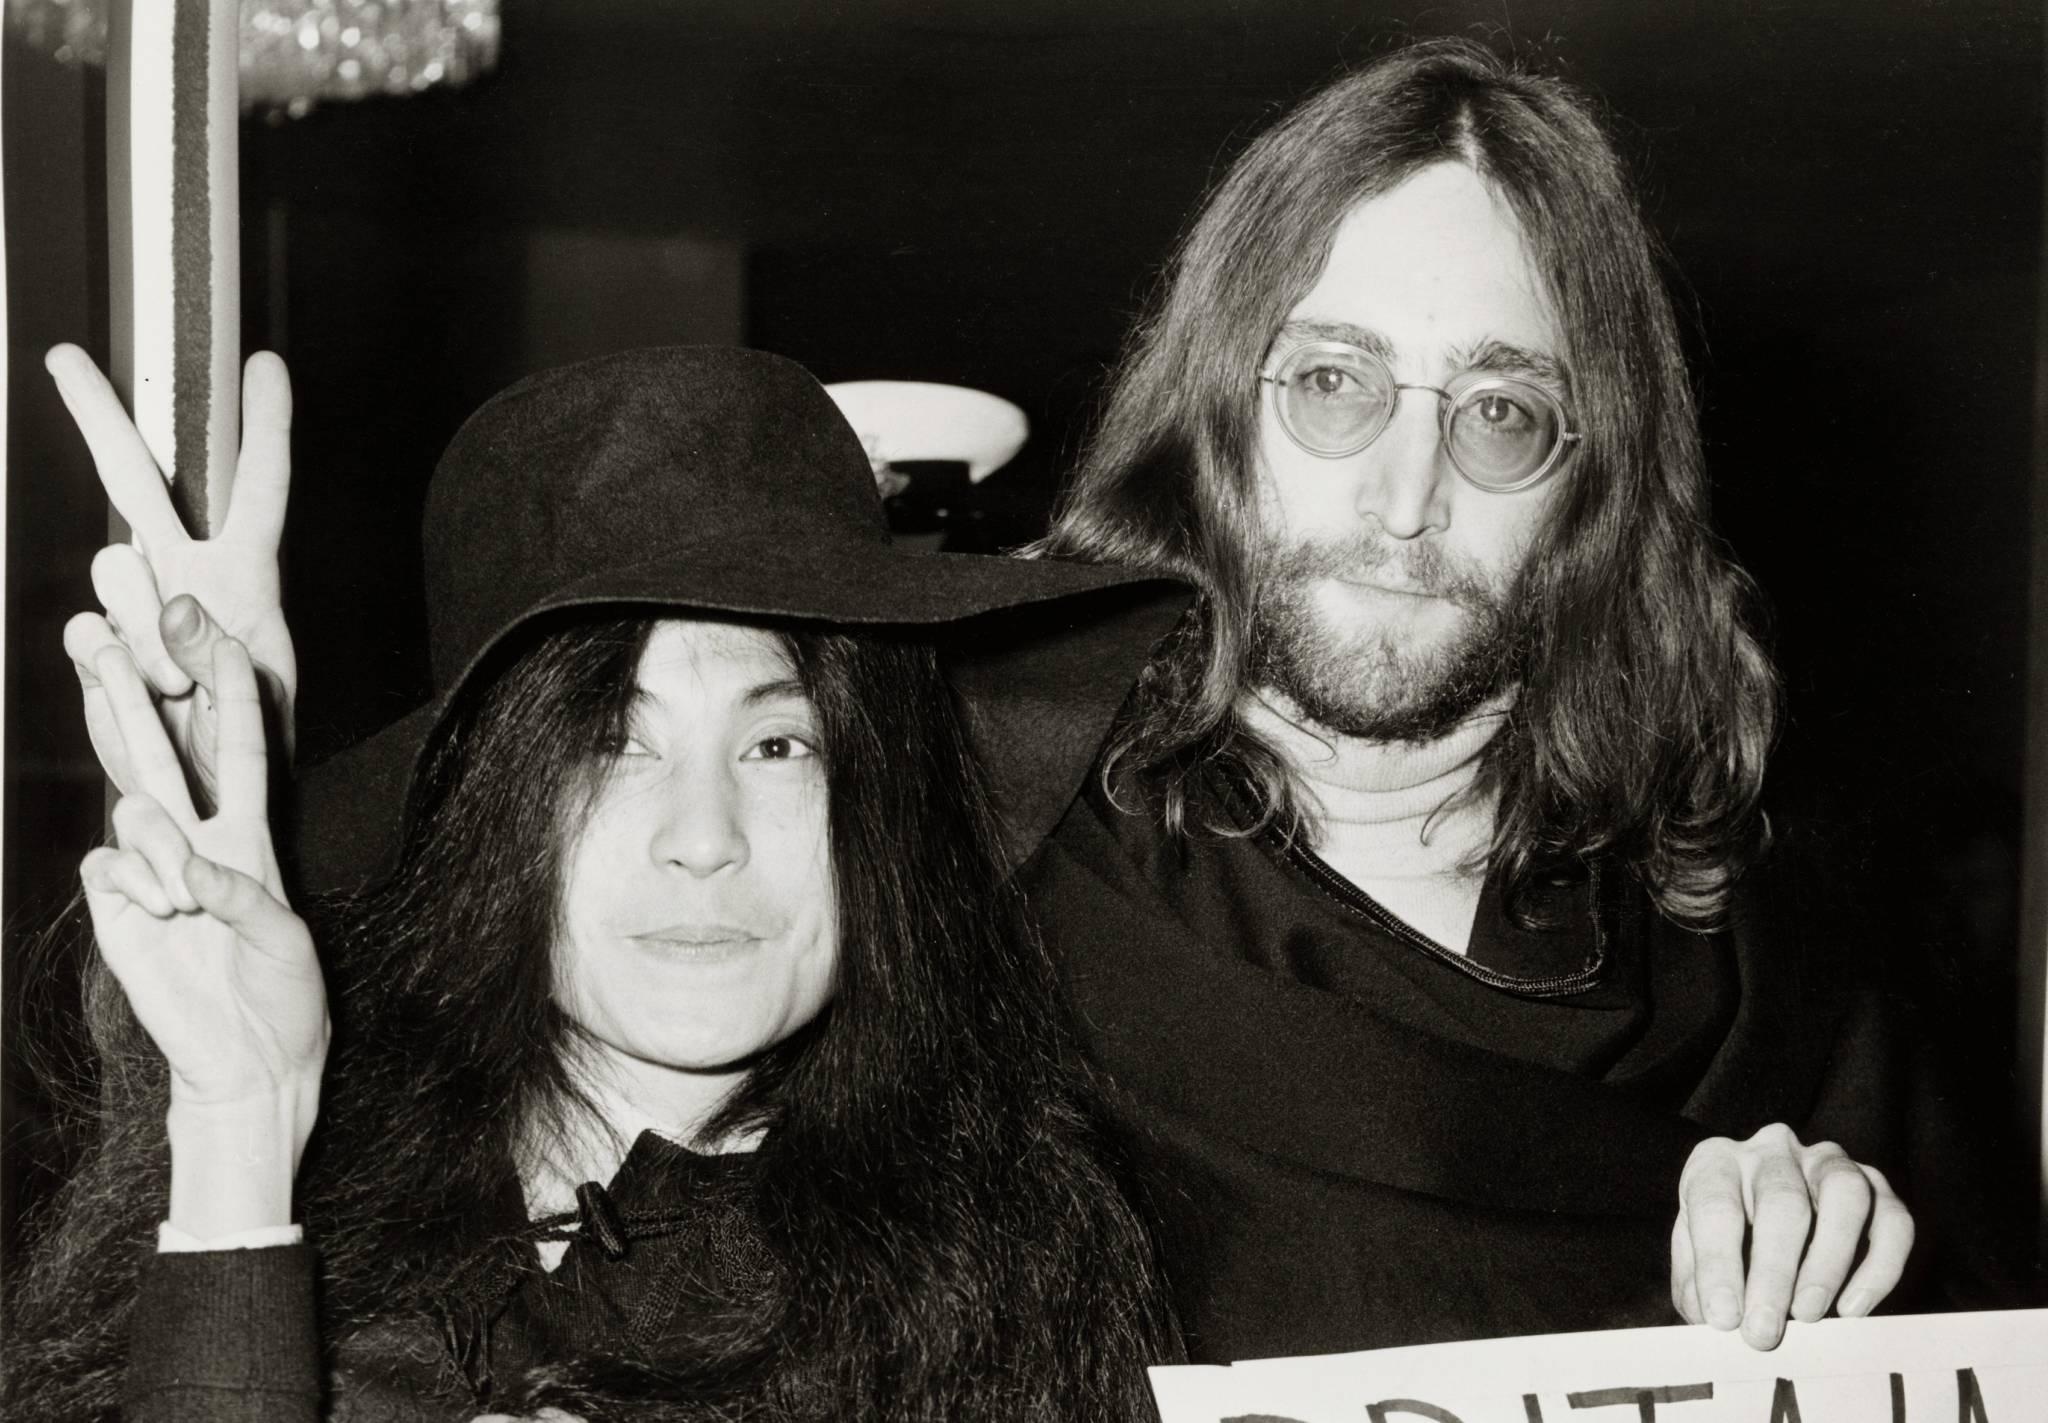  John Lennon i Yoko Ono (Fot. BEW Photo)